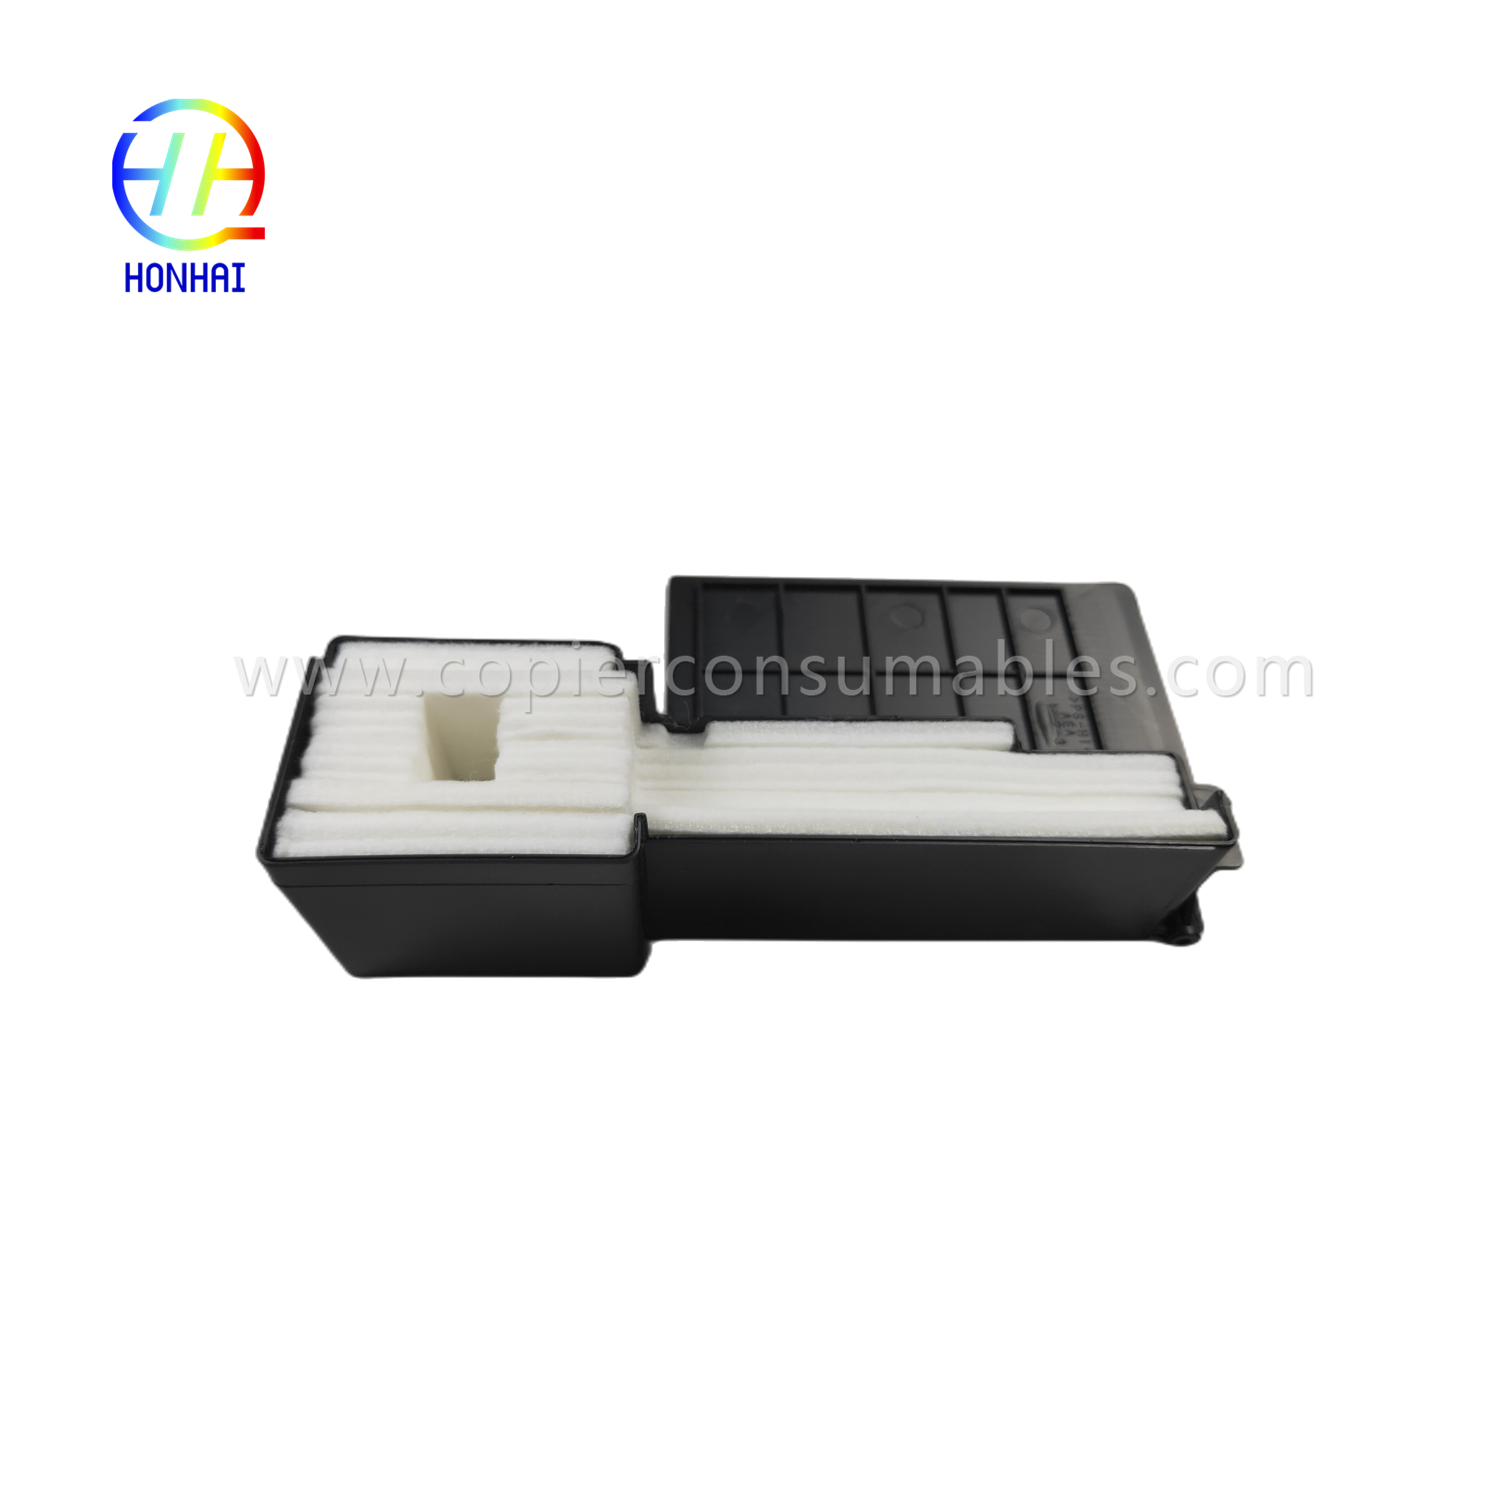 Waste Ink Pad Pack for Epson L220 L360 L380 Printer